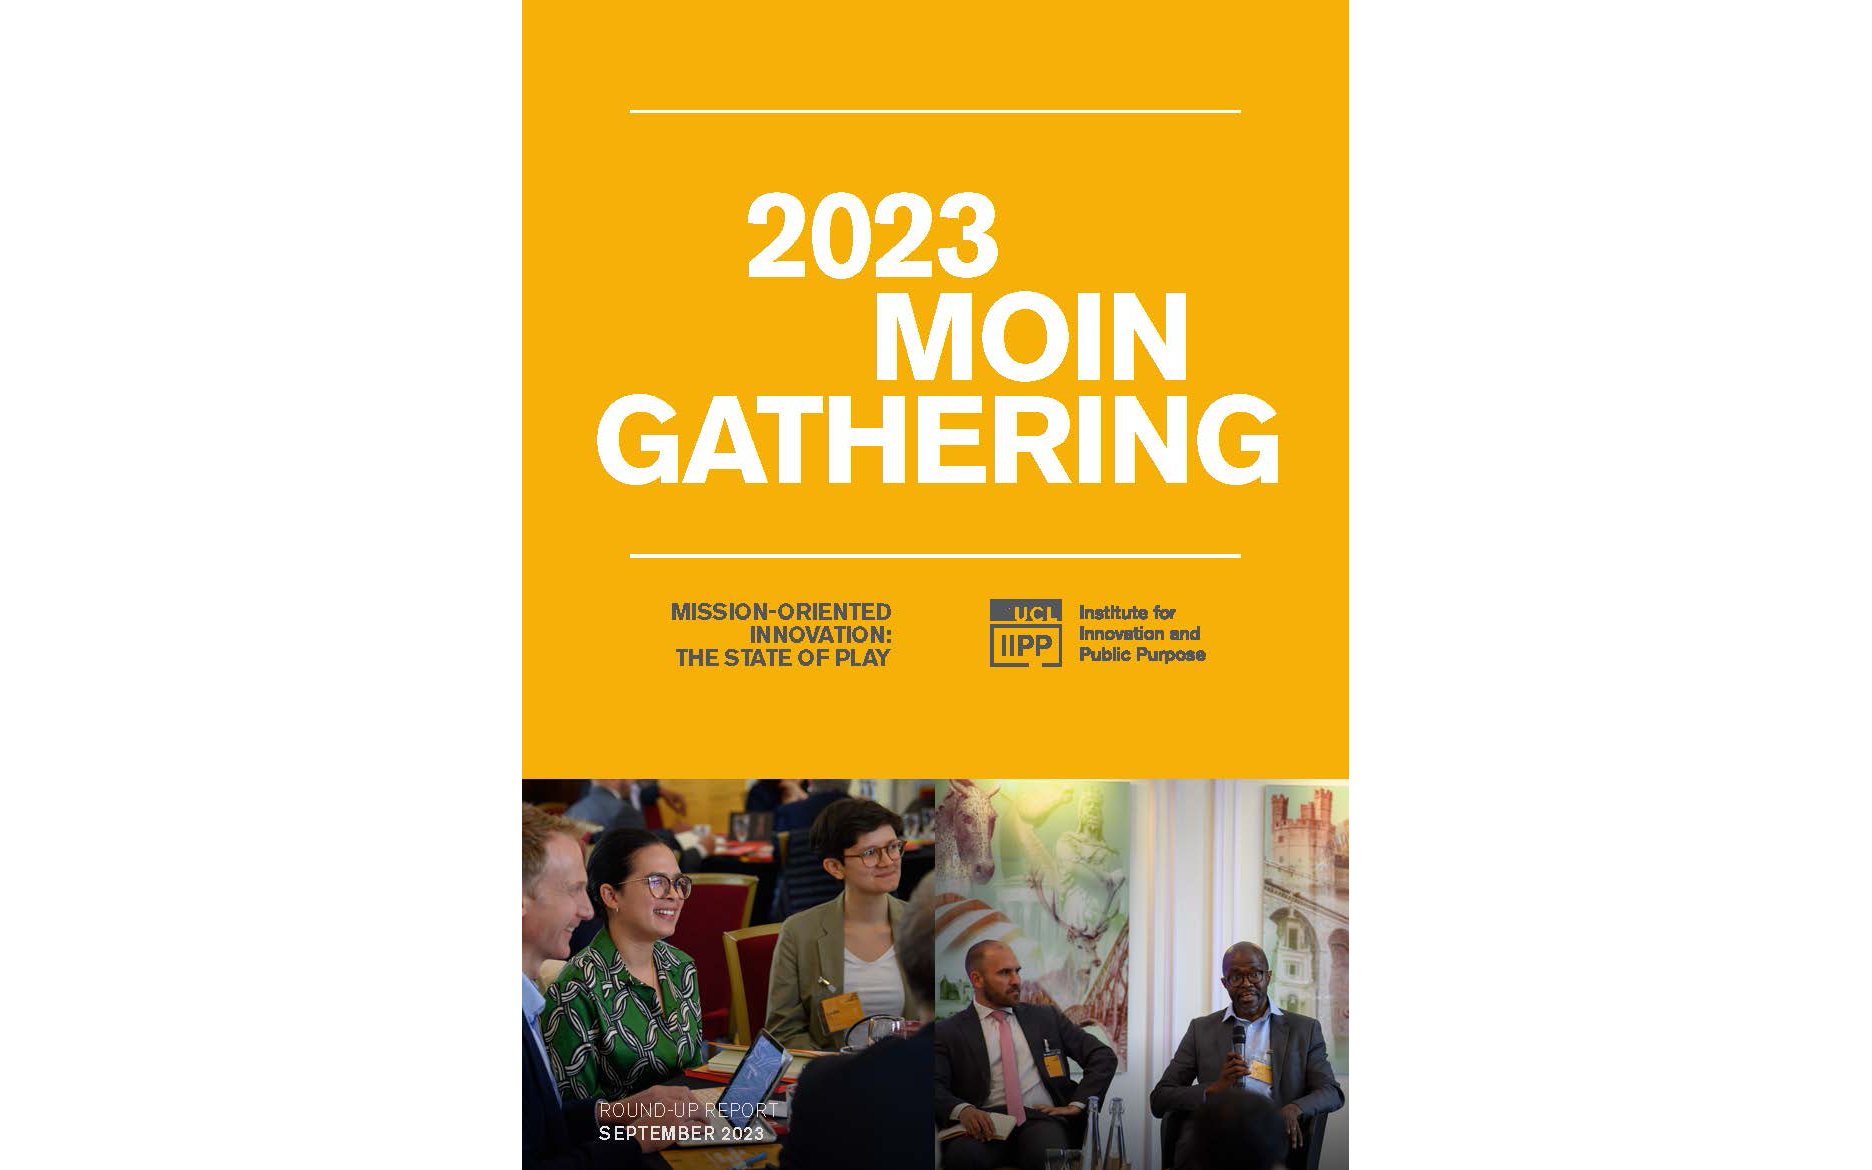 MOIN Global Gathering 2023